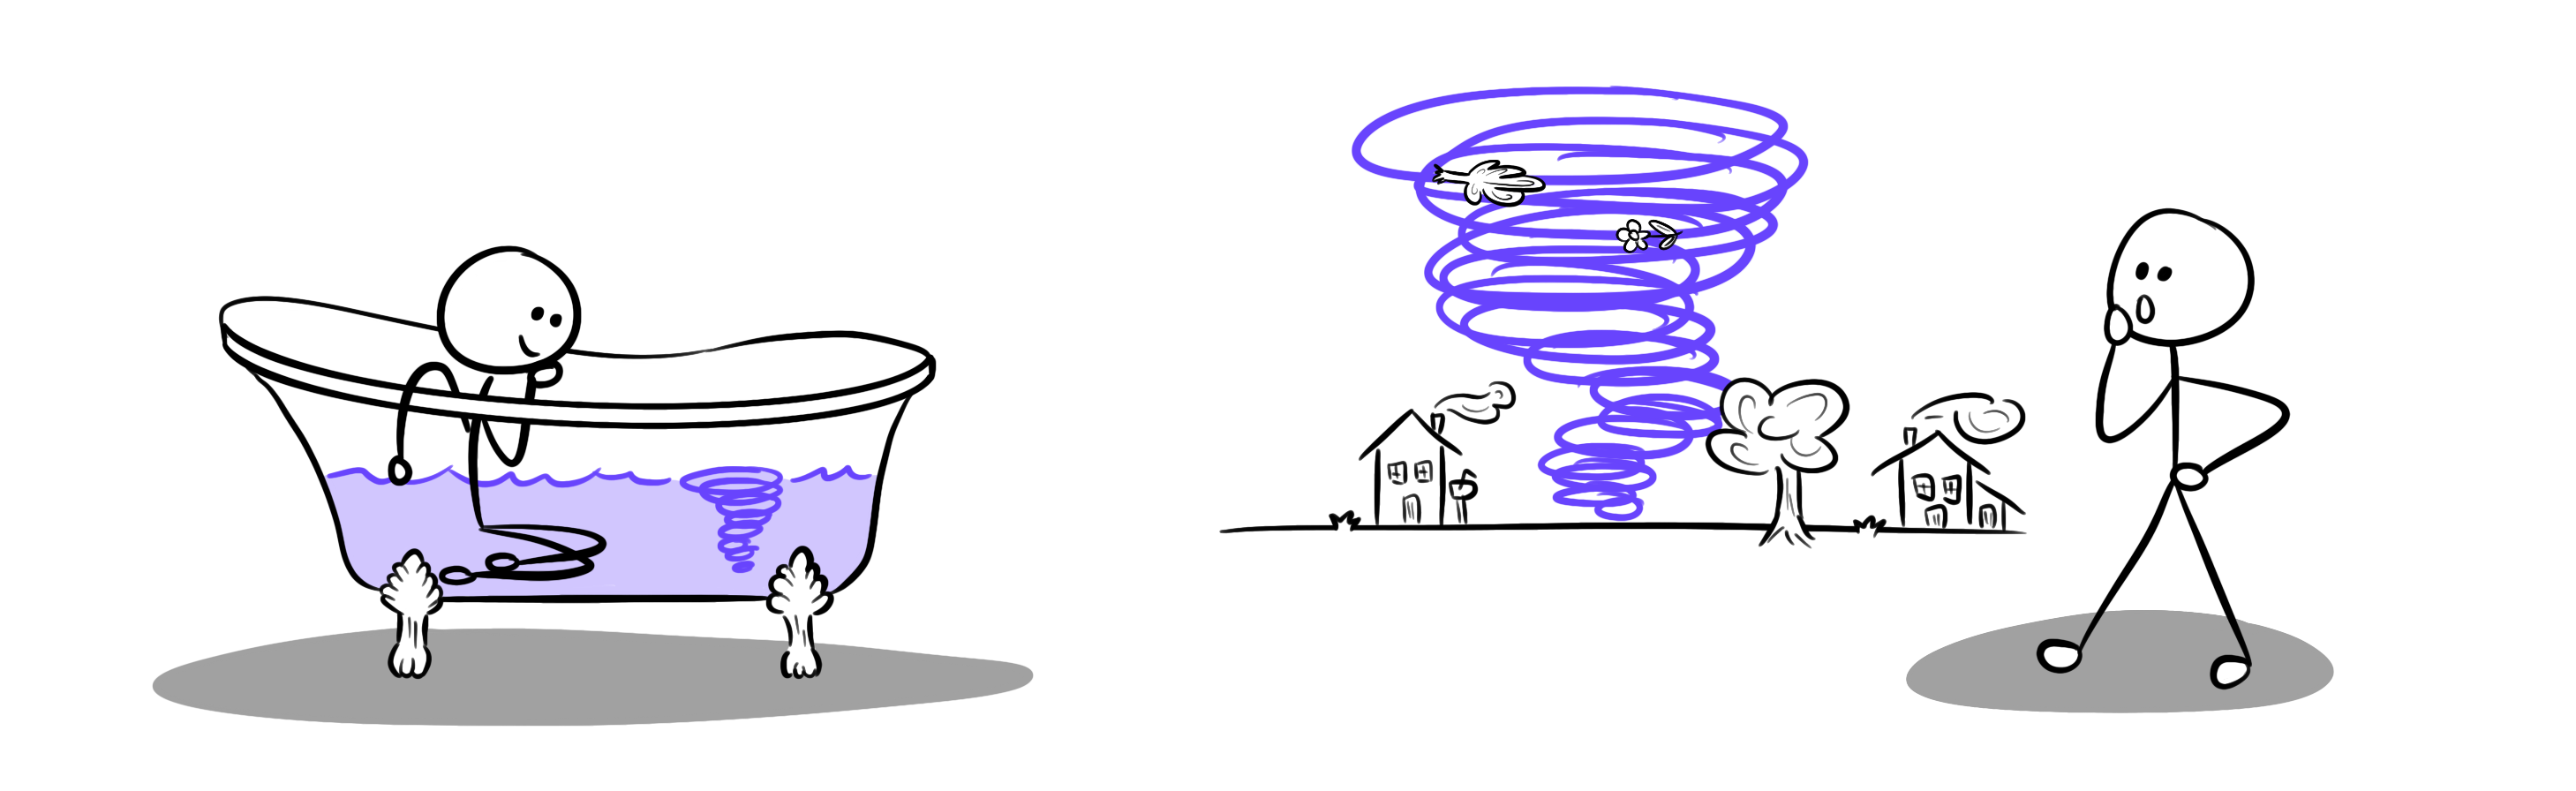 water tornado and air tornado